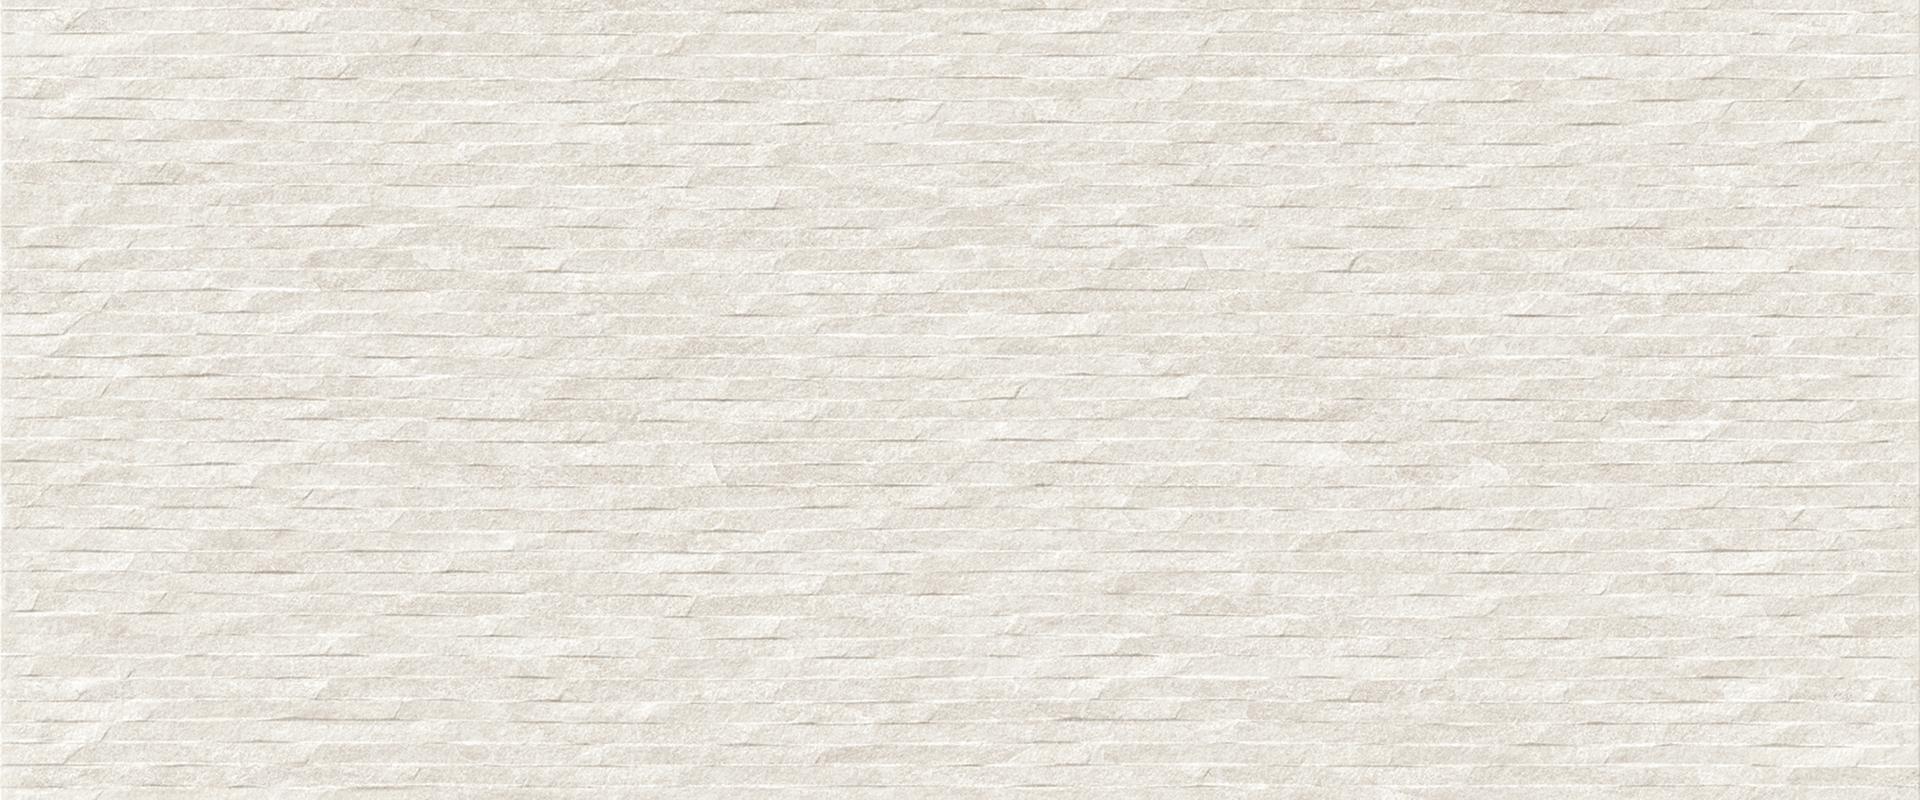 Oros Stone: Split Face White Field Tile (24"x48"x9.5-mm | matte)